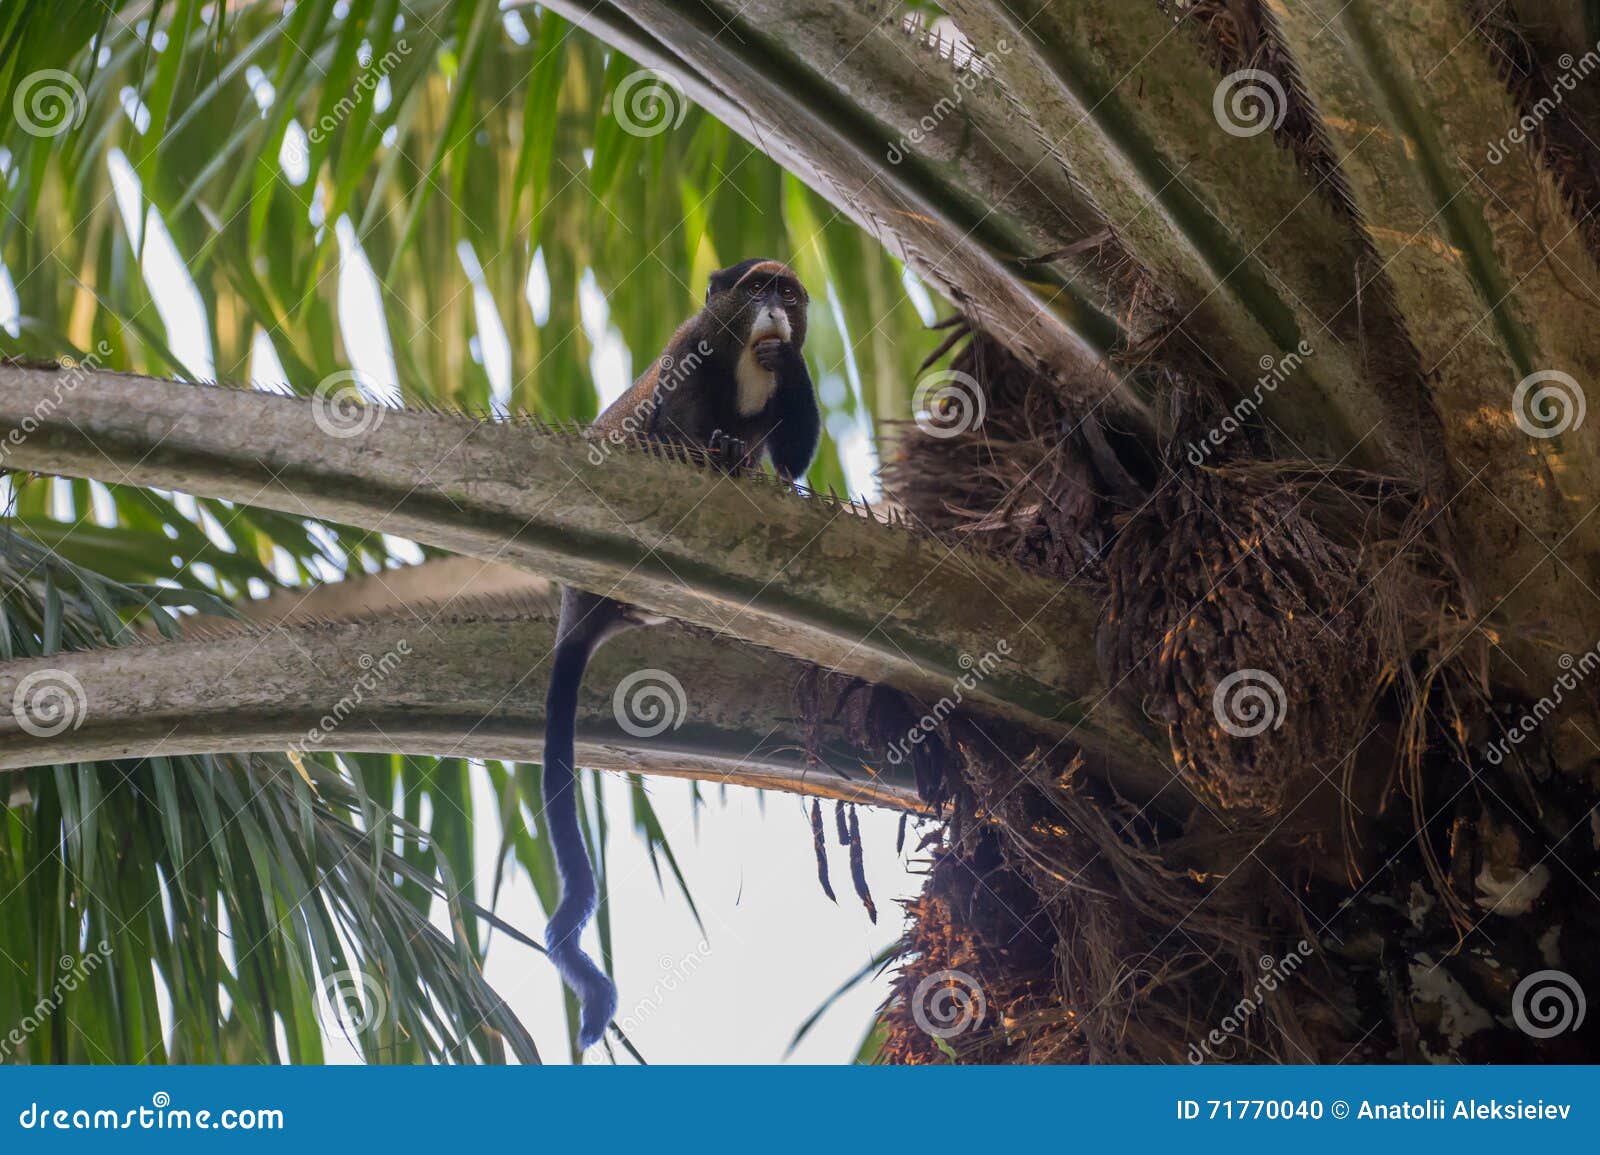 nimble marmoset eating on the tree (republic of the congo)